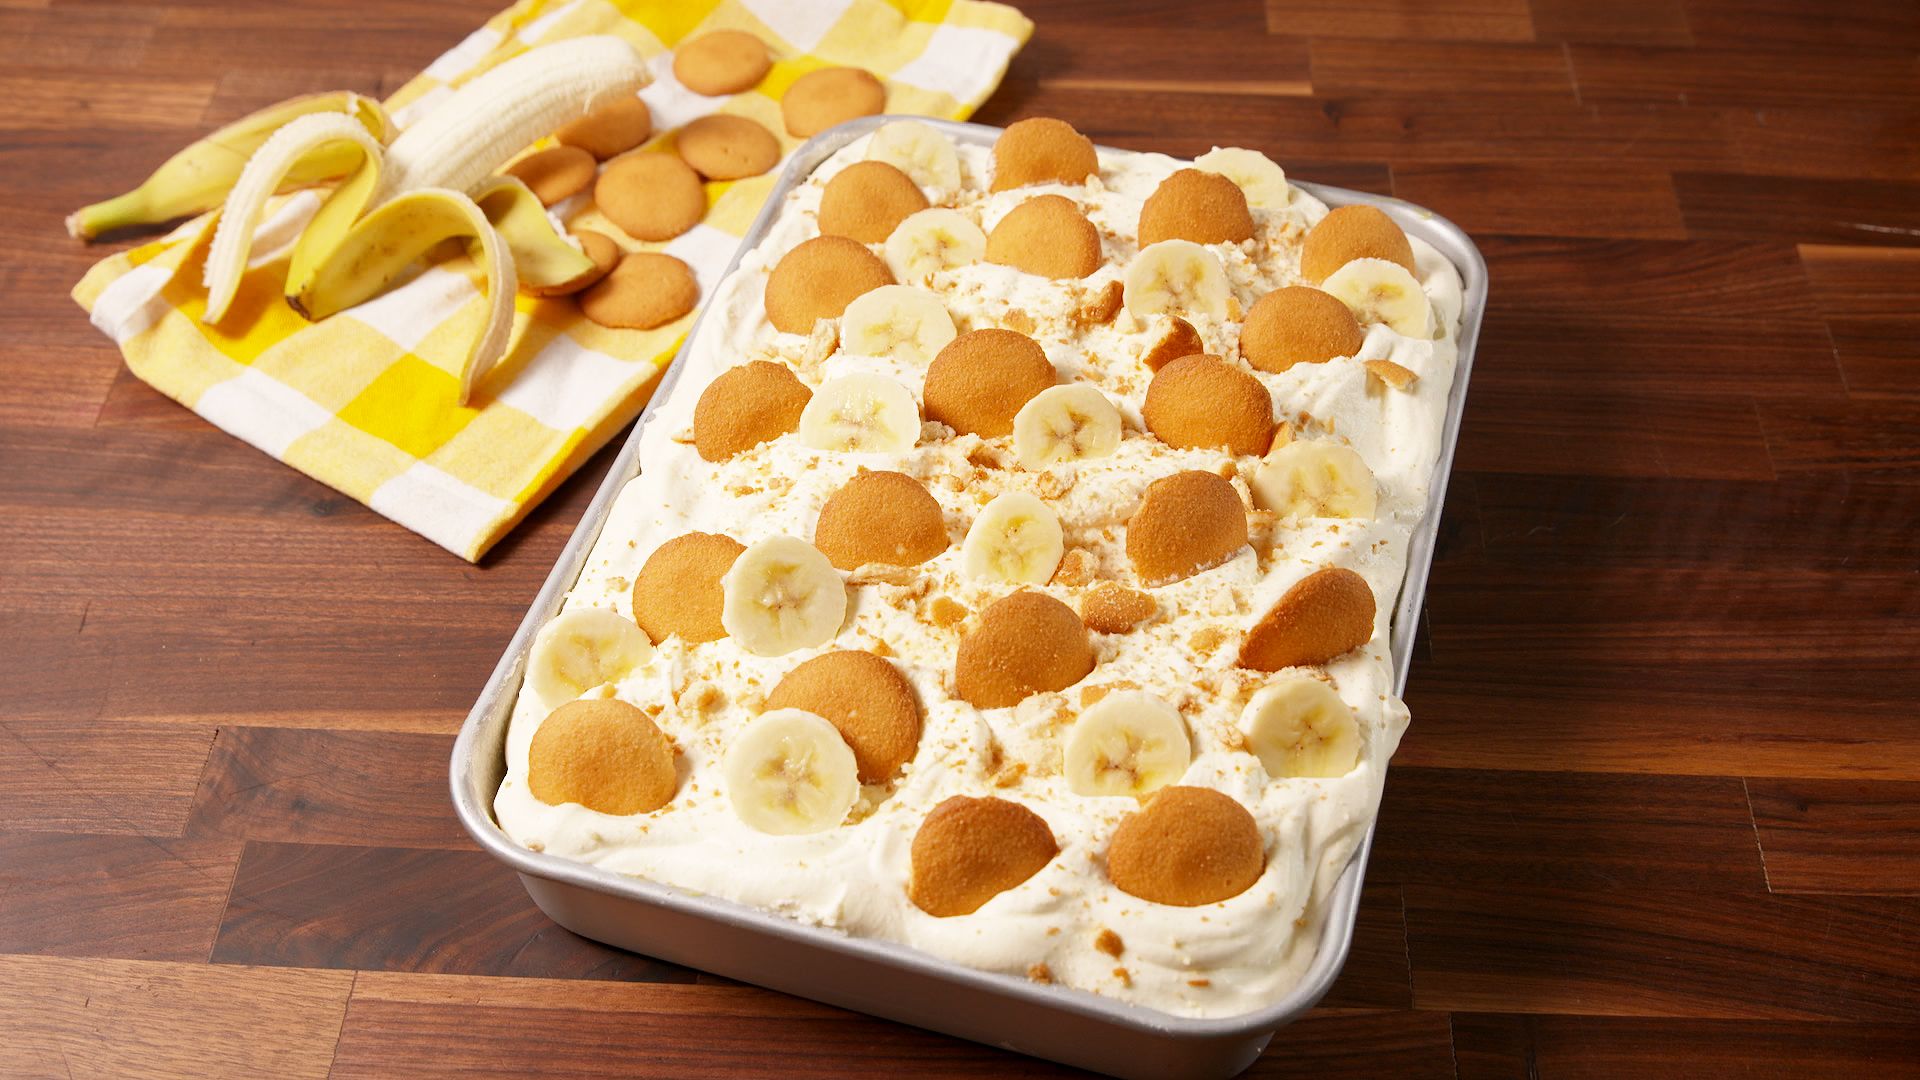 Pistachio Pudding Cake Recipe: How to Make It